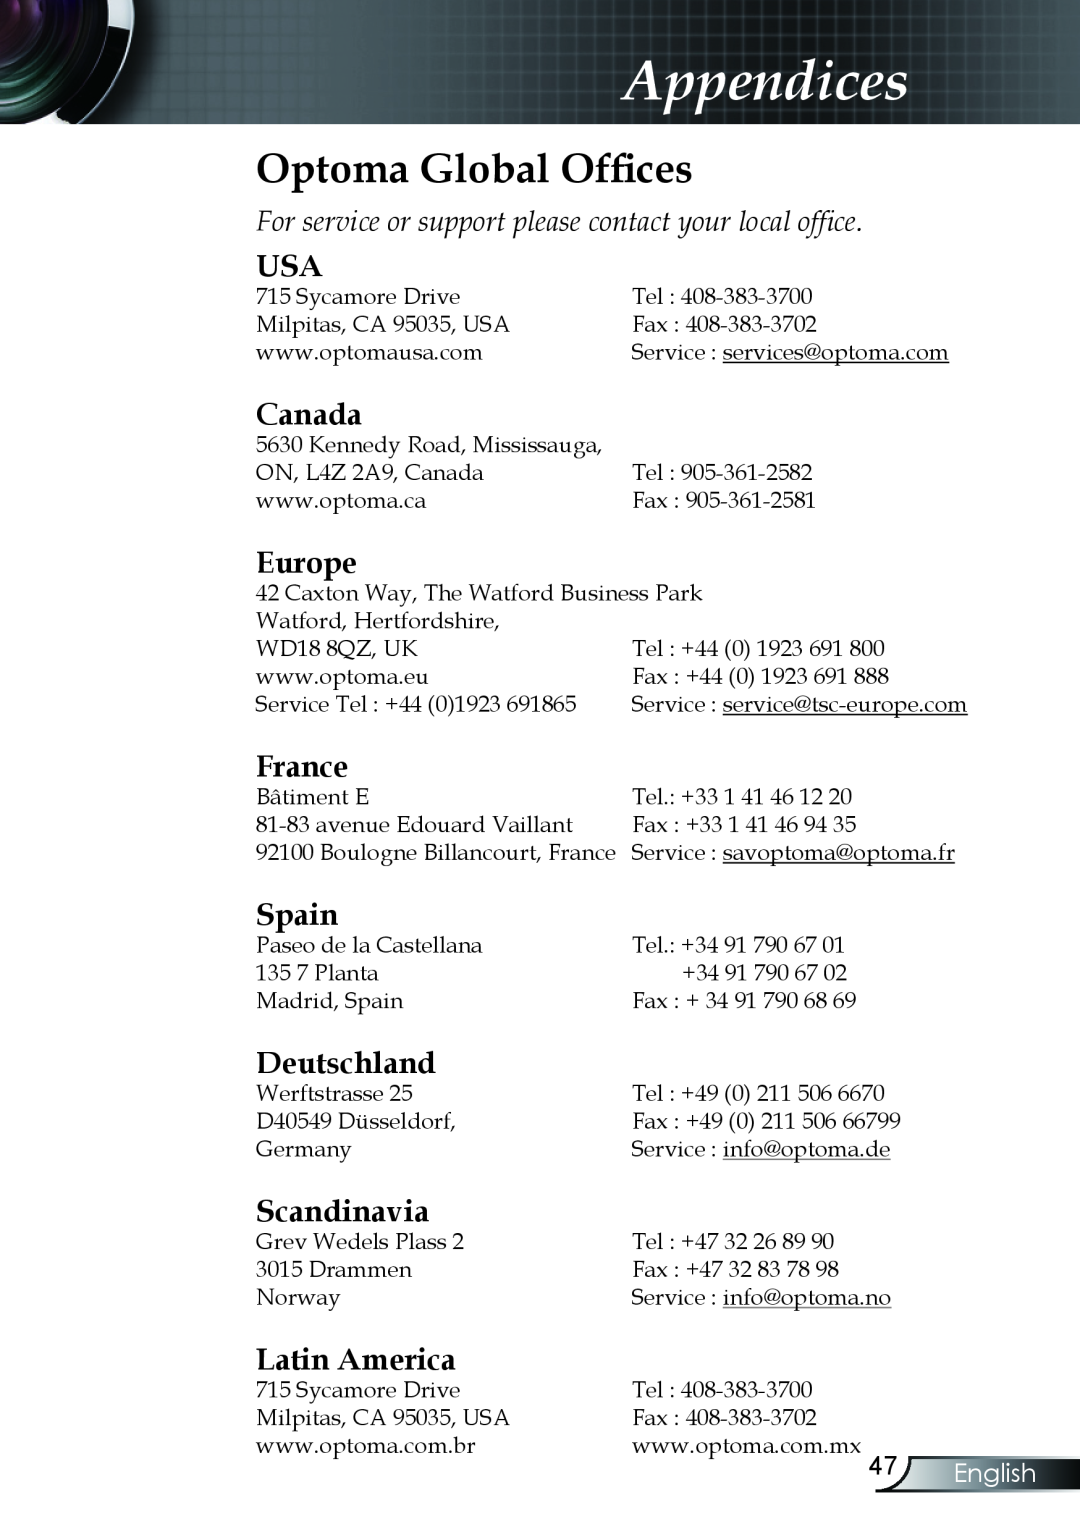 Optoma Technology TX330 manual Canada, Europe, France, Spain, Deutschland, Scandinavia, Latin America, Appendices, English 